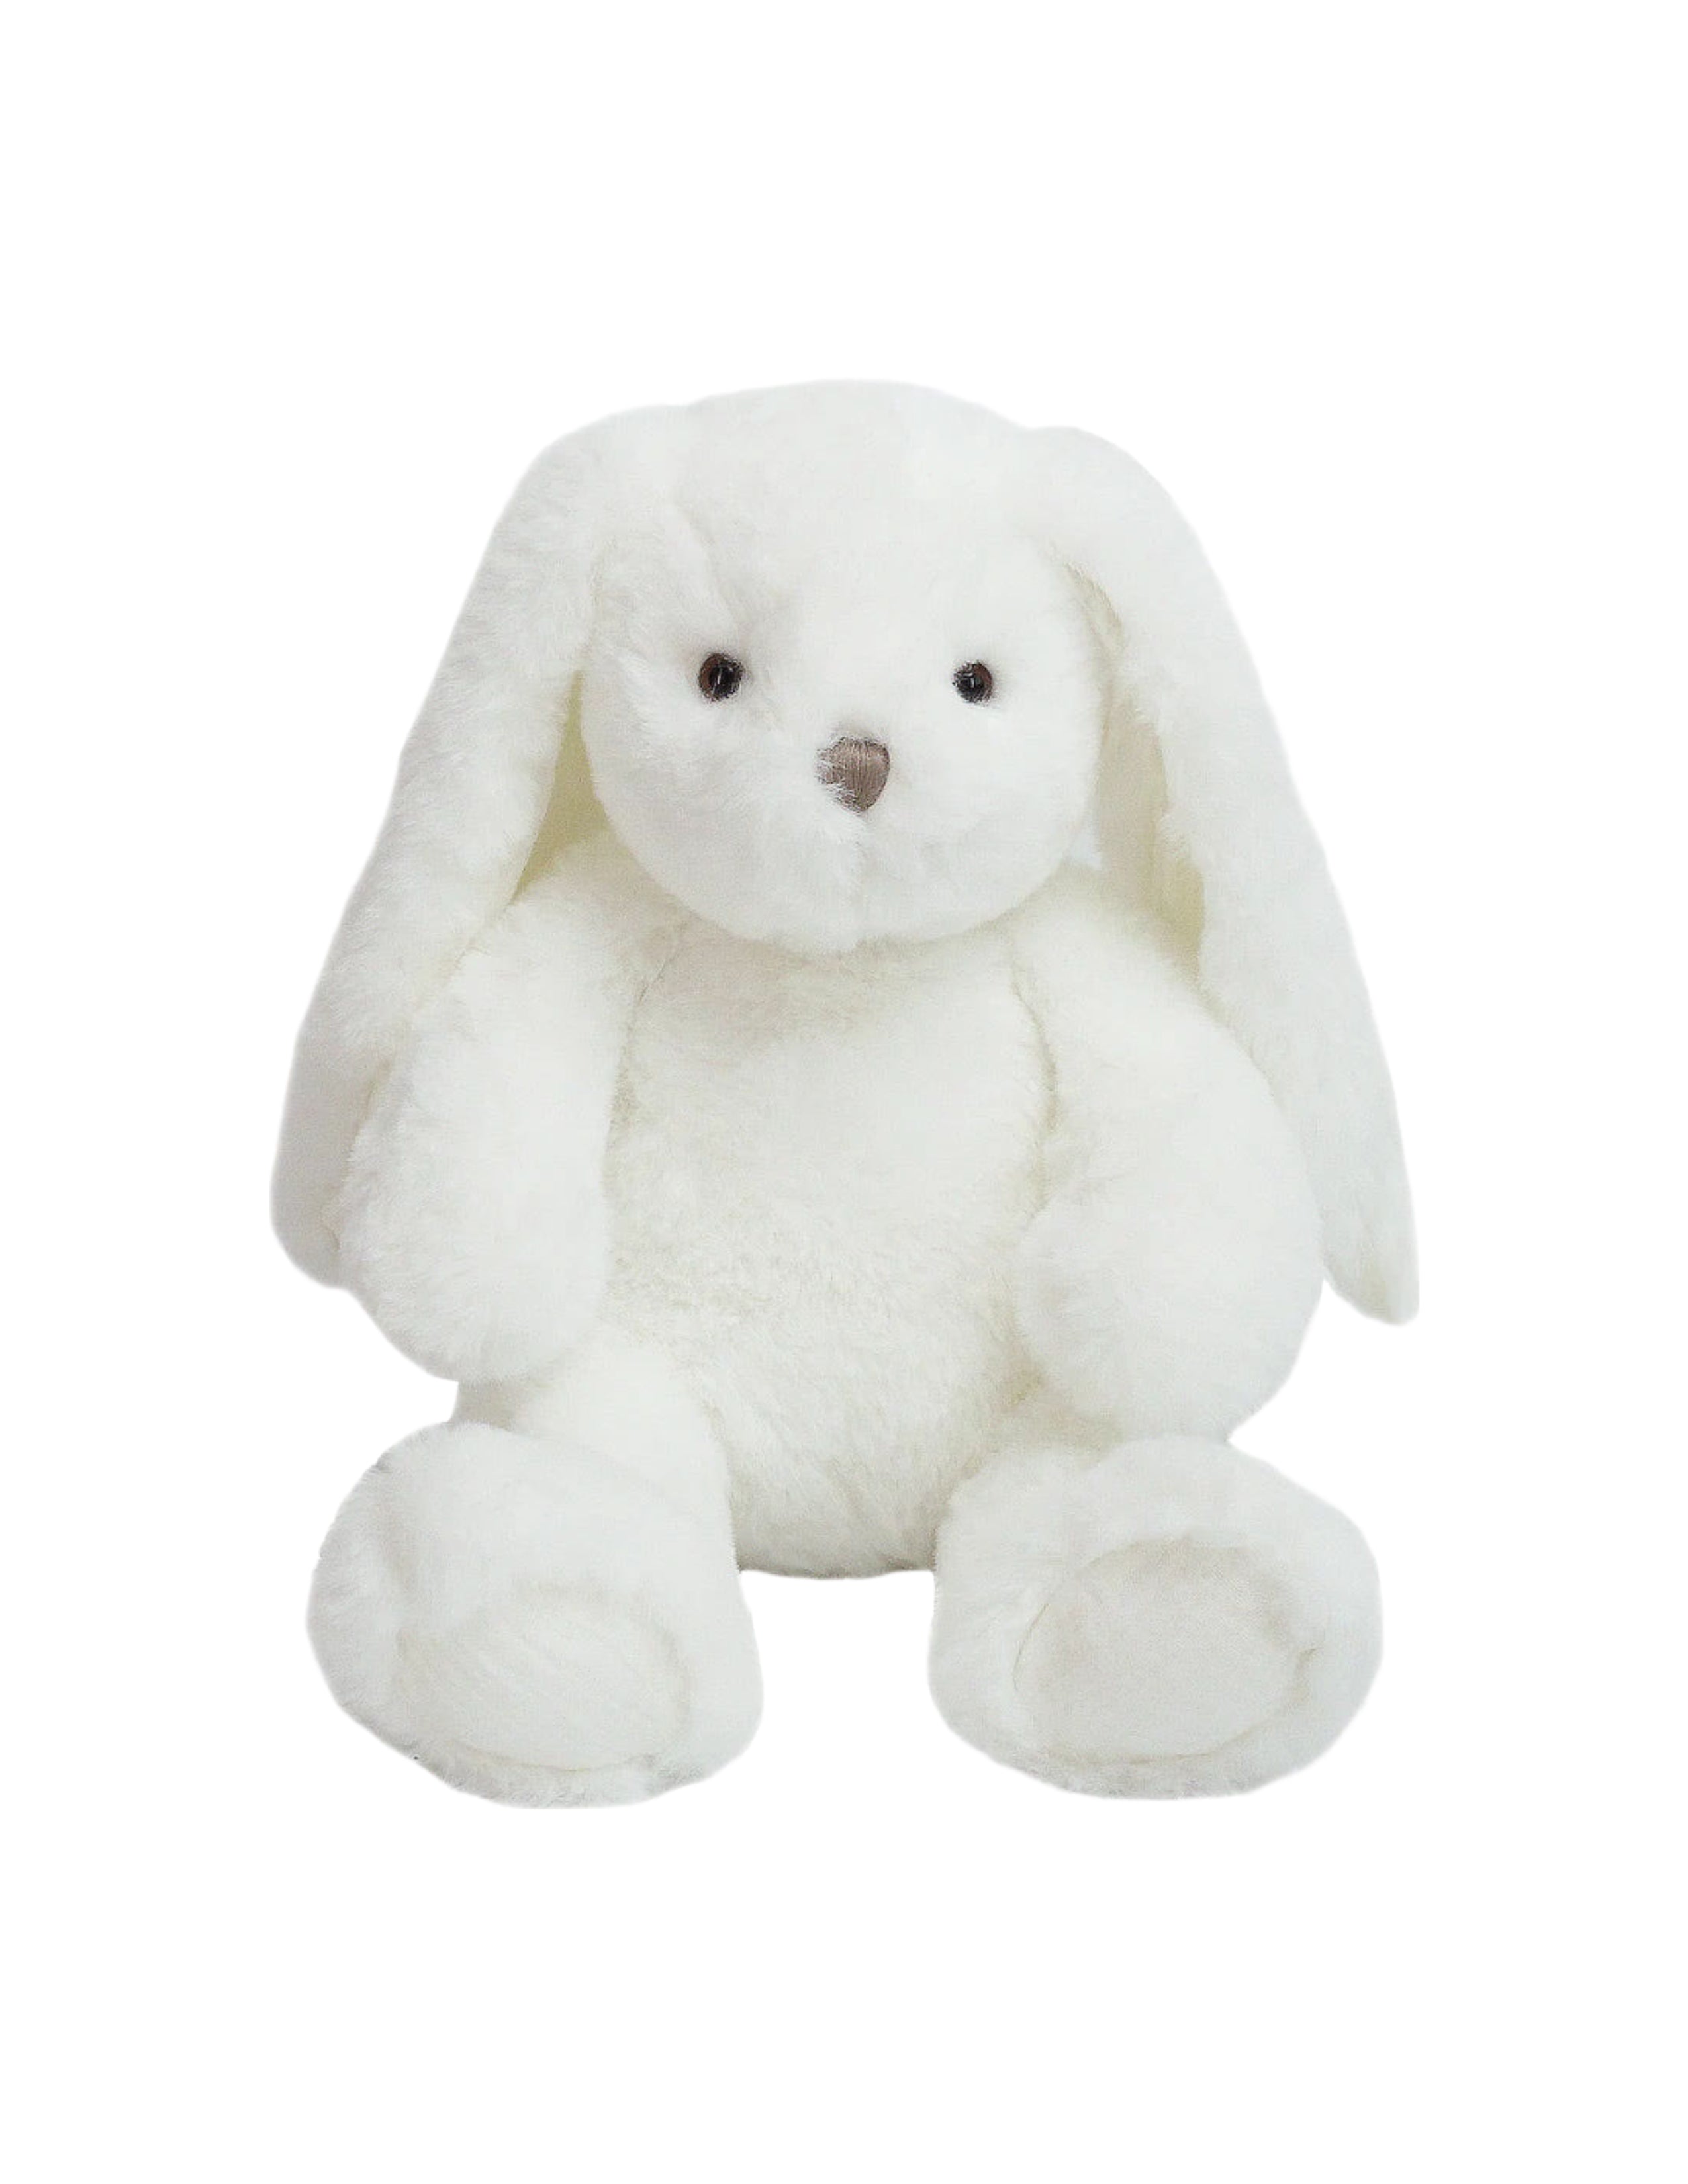 'Cotton' Bunny